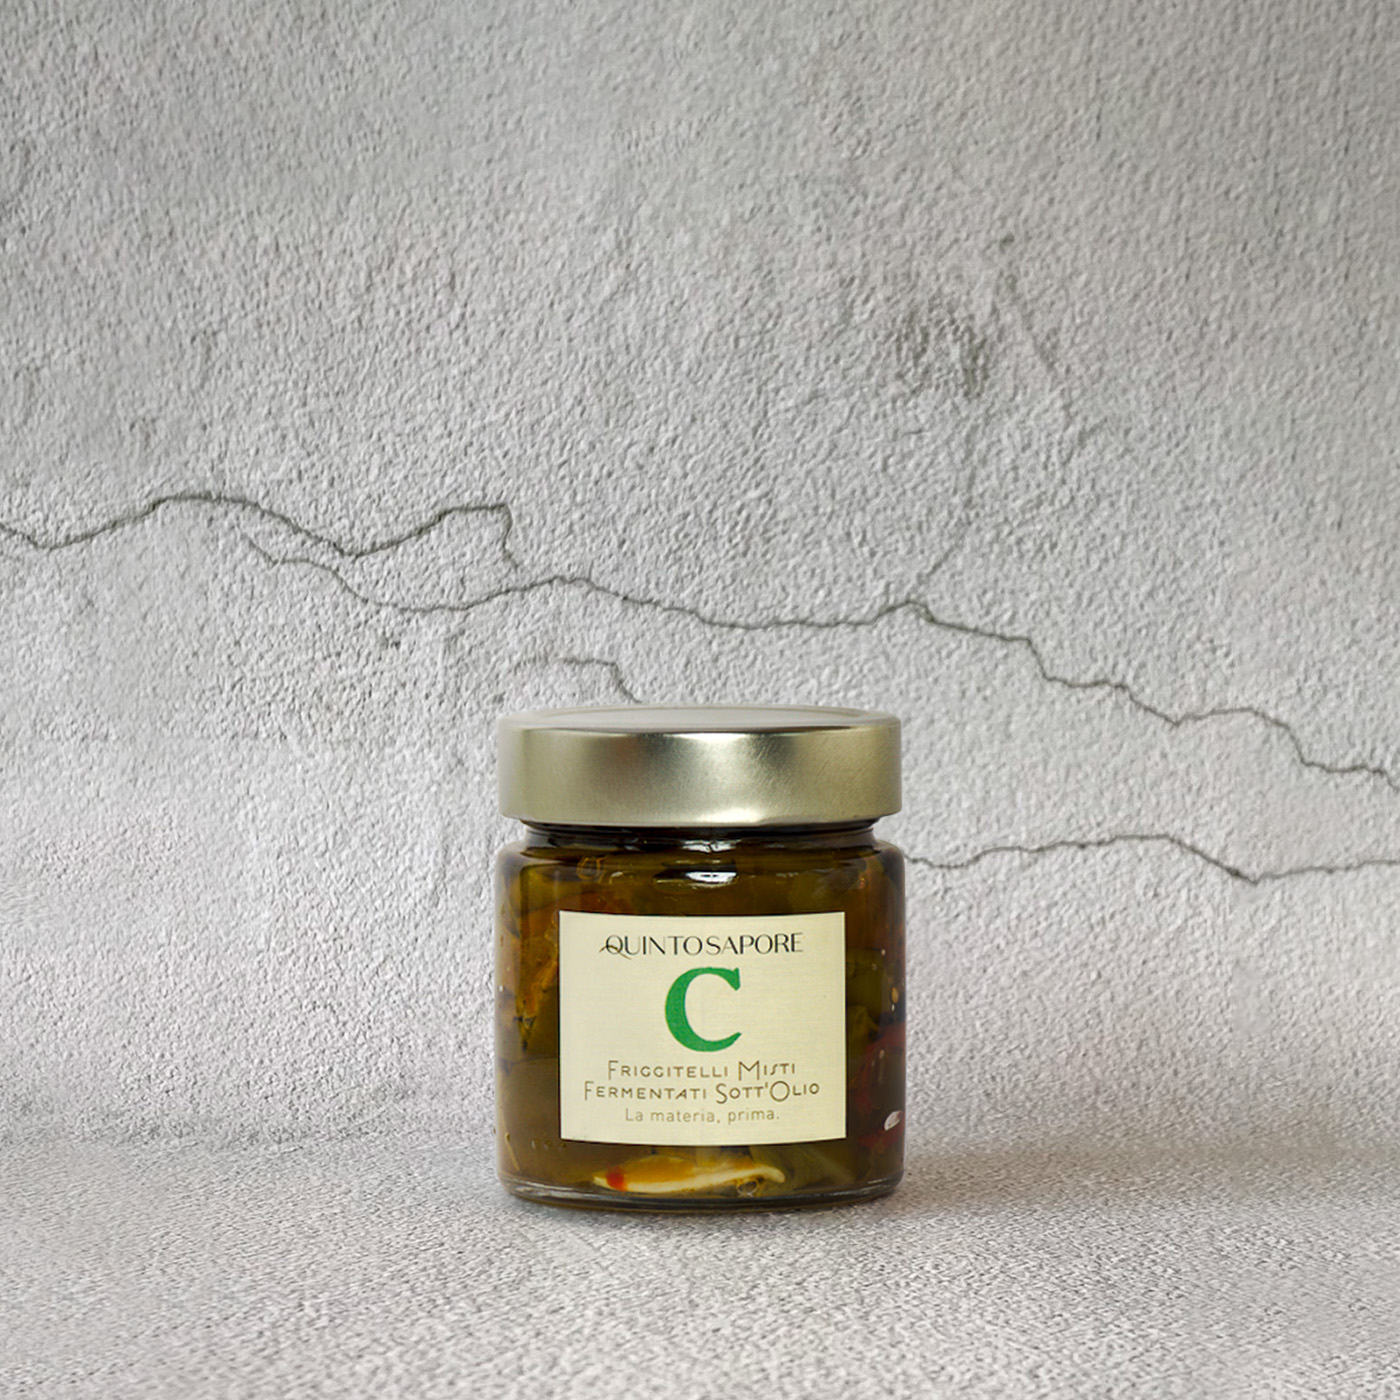 Santocielo - Product Carousel - Friggitelli misti fermentati sott'olio